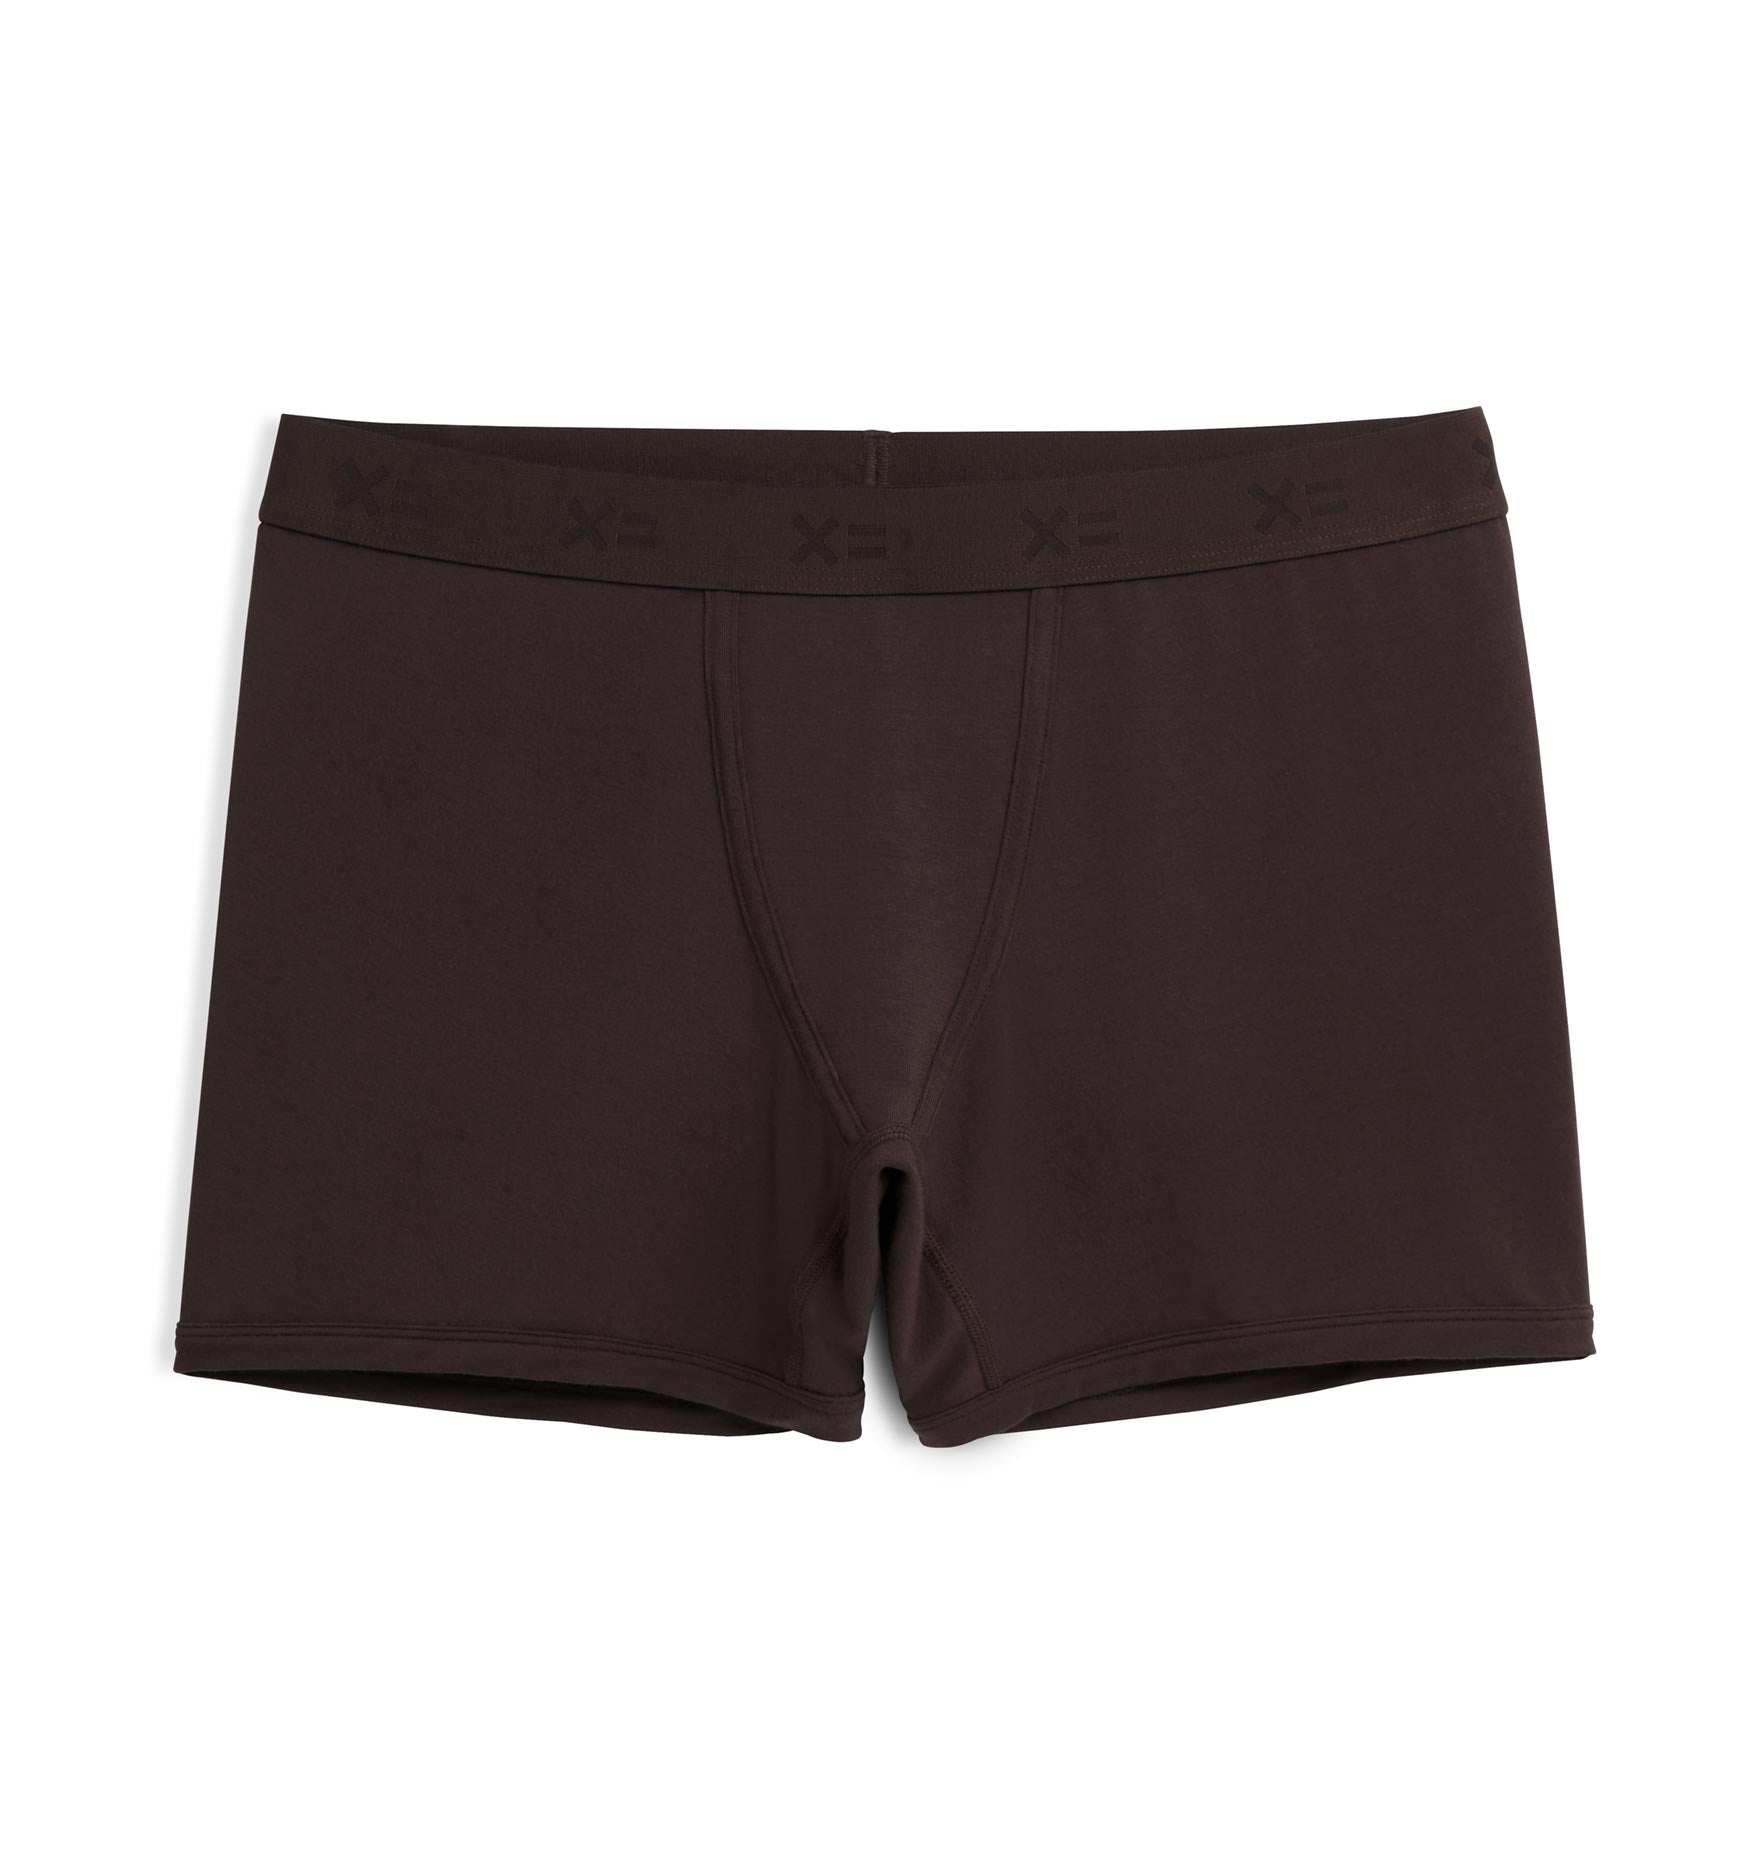 TomboyX Boxer Briefs Underwear, 4.5 Inseam, Modal Stretch Comfortable Boy  Shorts Black Rainbow 4X Large